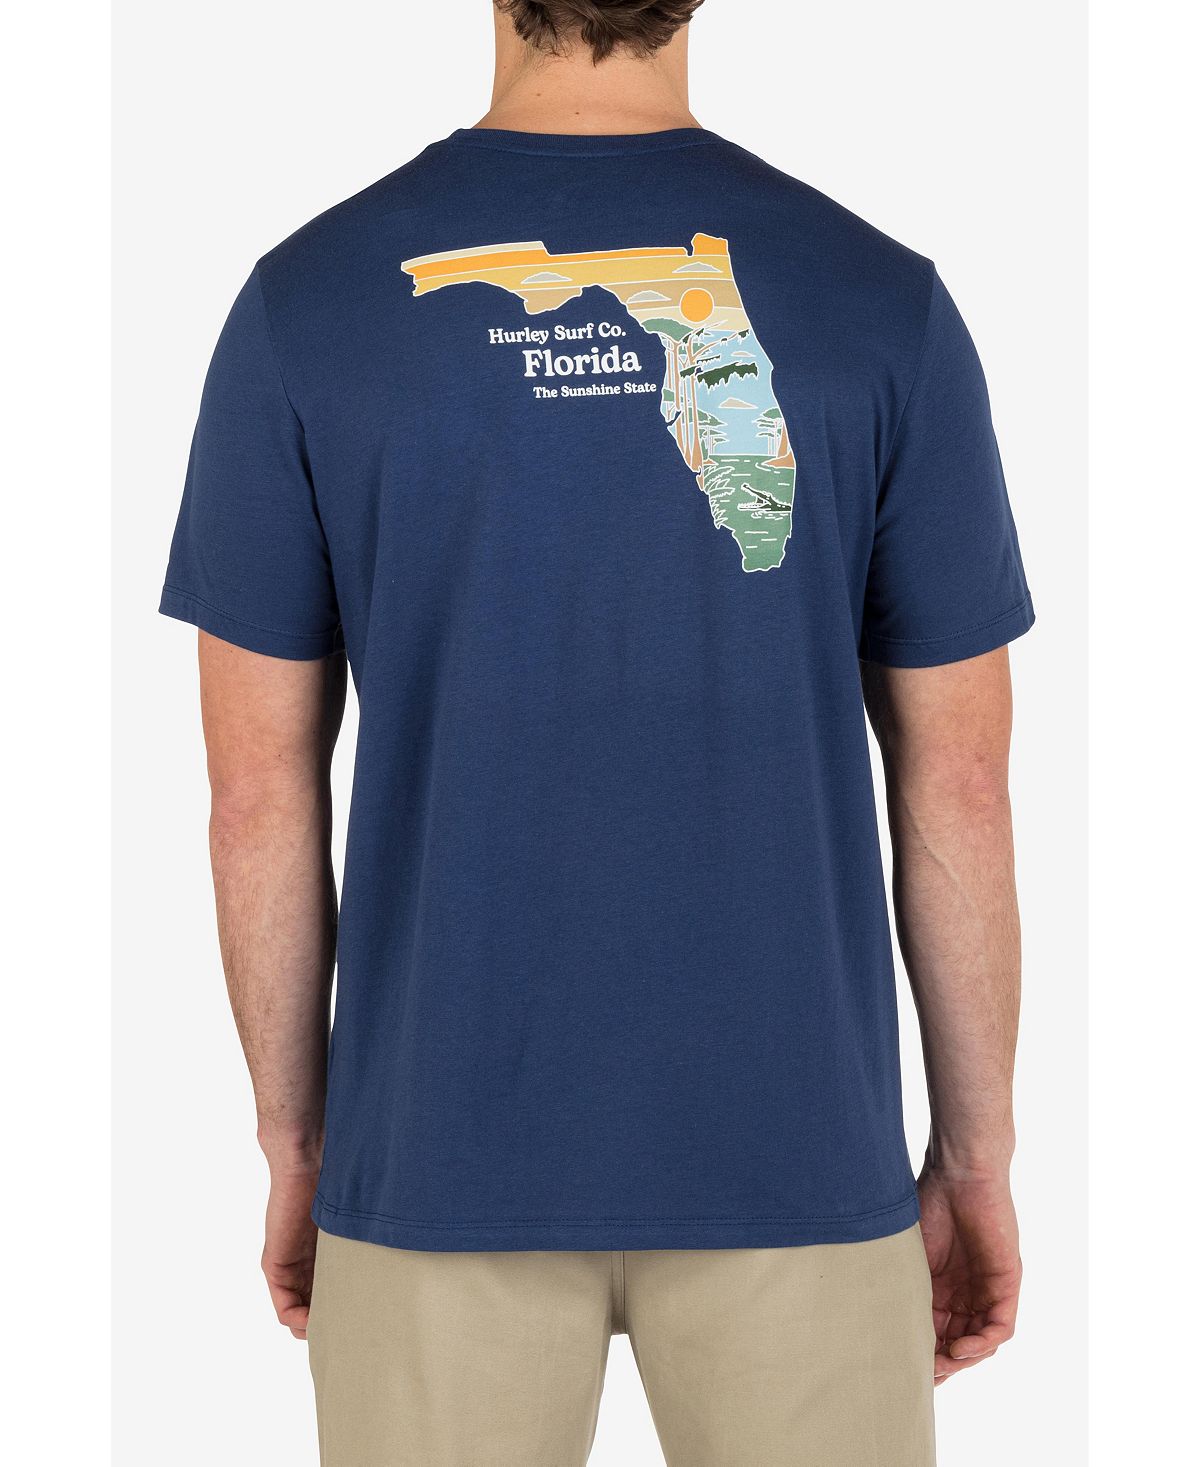 Мужская футболка State Pride с коротким рукавом на каждый день Hurley мужская хлопковая футболка с короткими рукавами country parks california state yose mite graphic sand бежевый